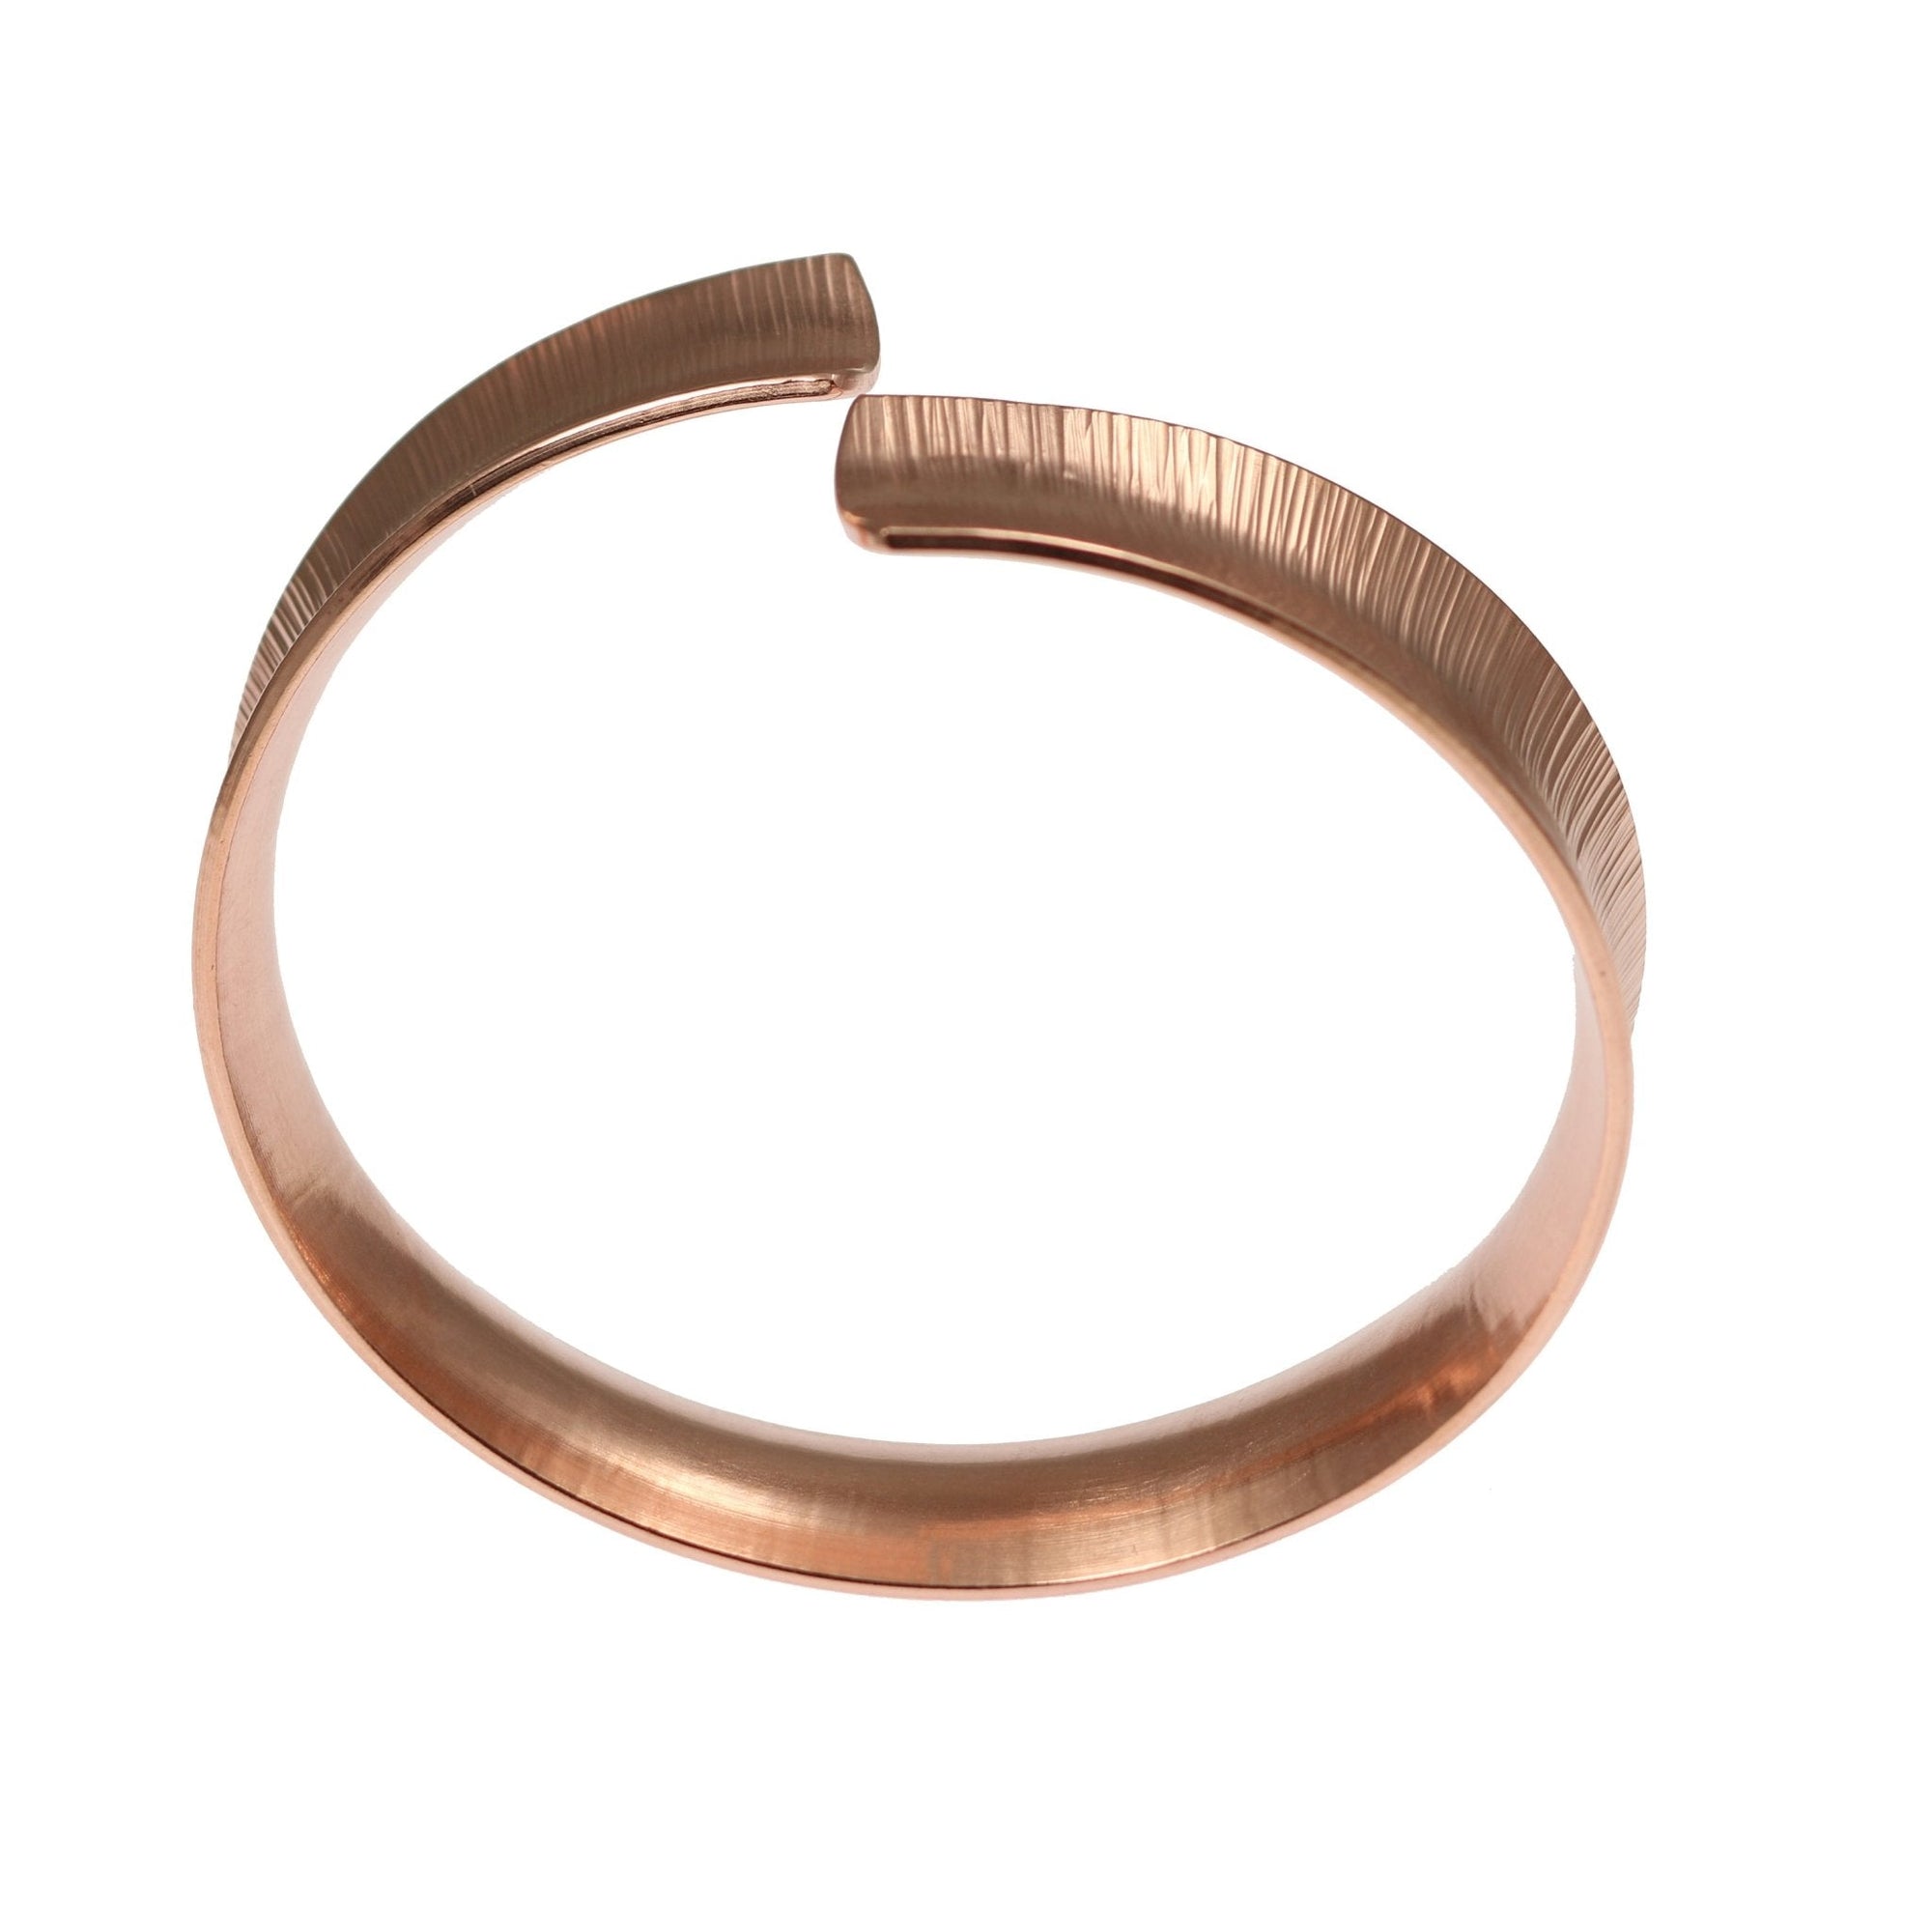 Shape of Chased Copper Bangle Bracelet